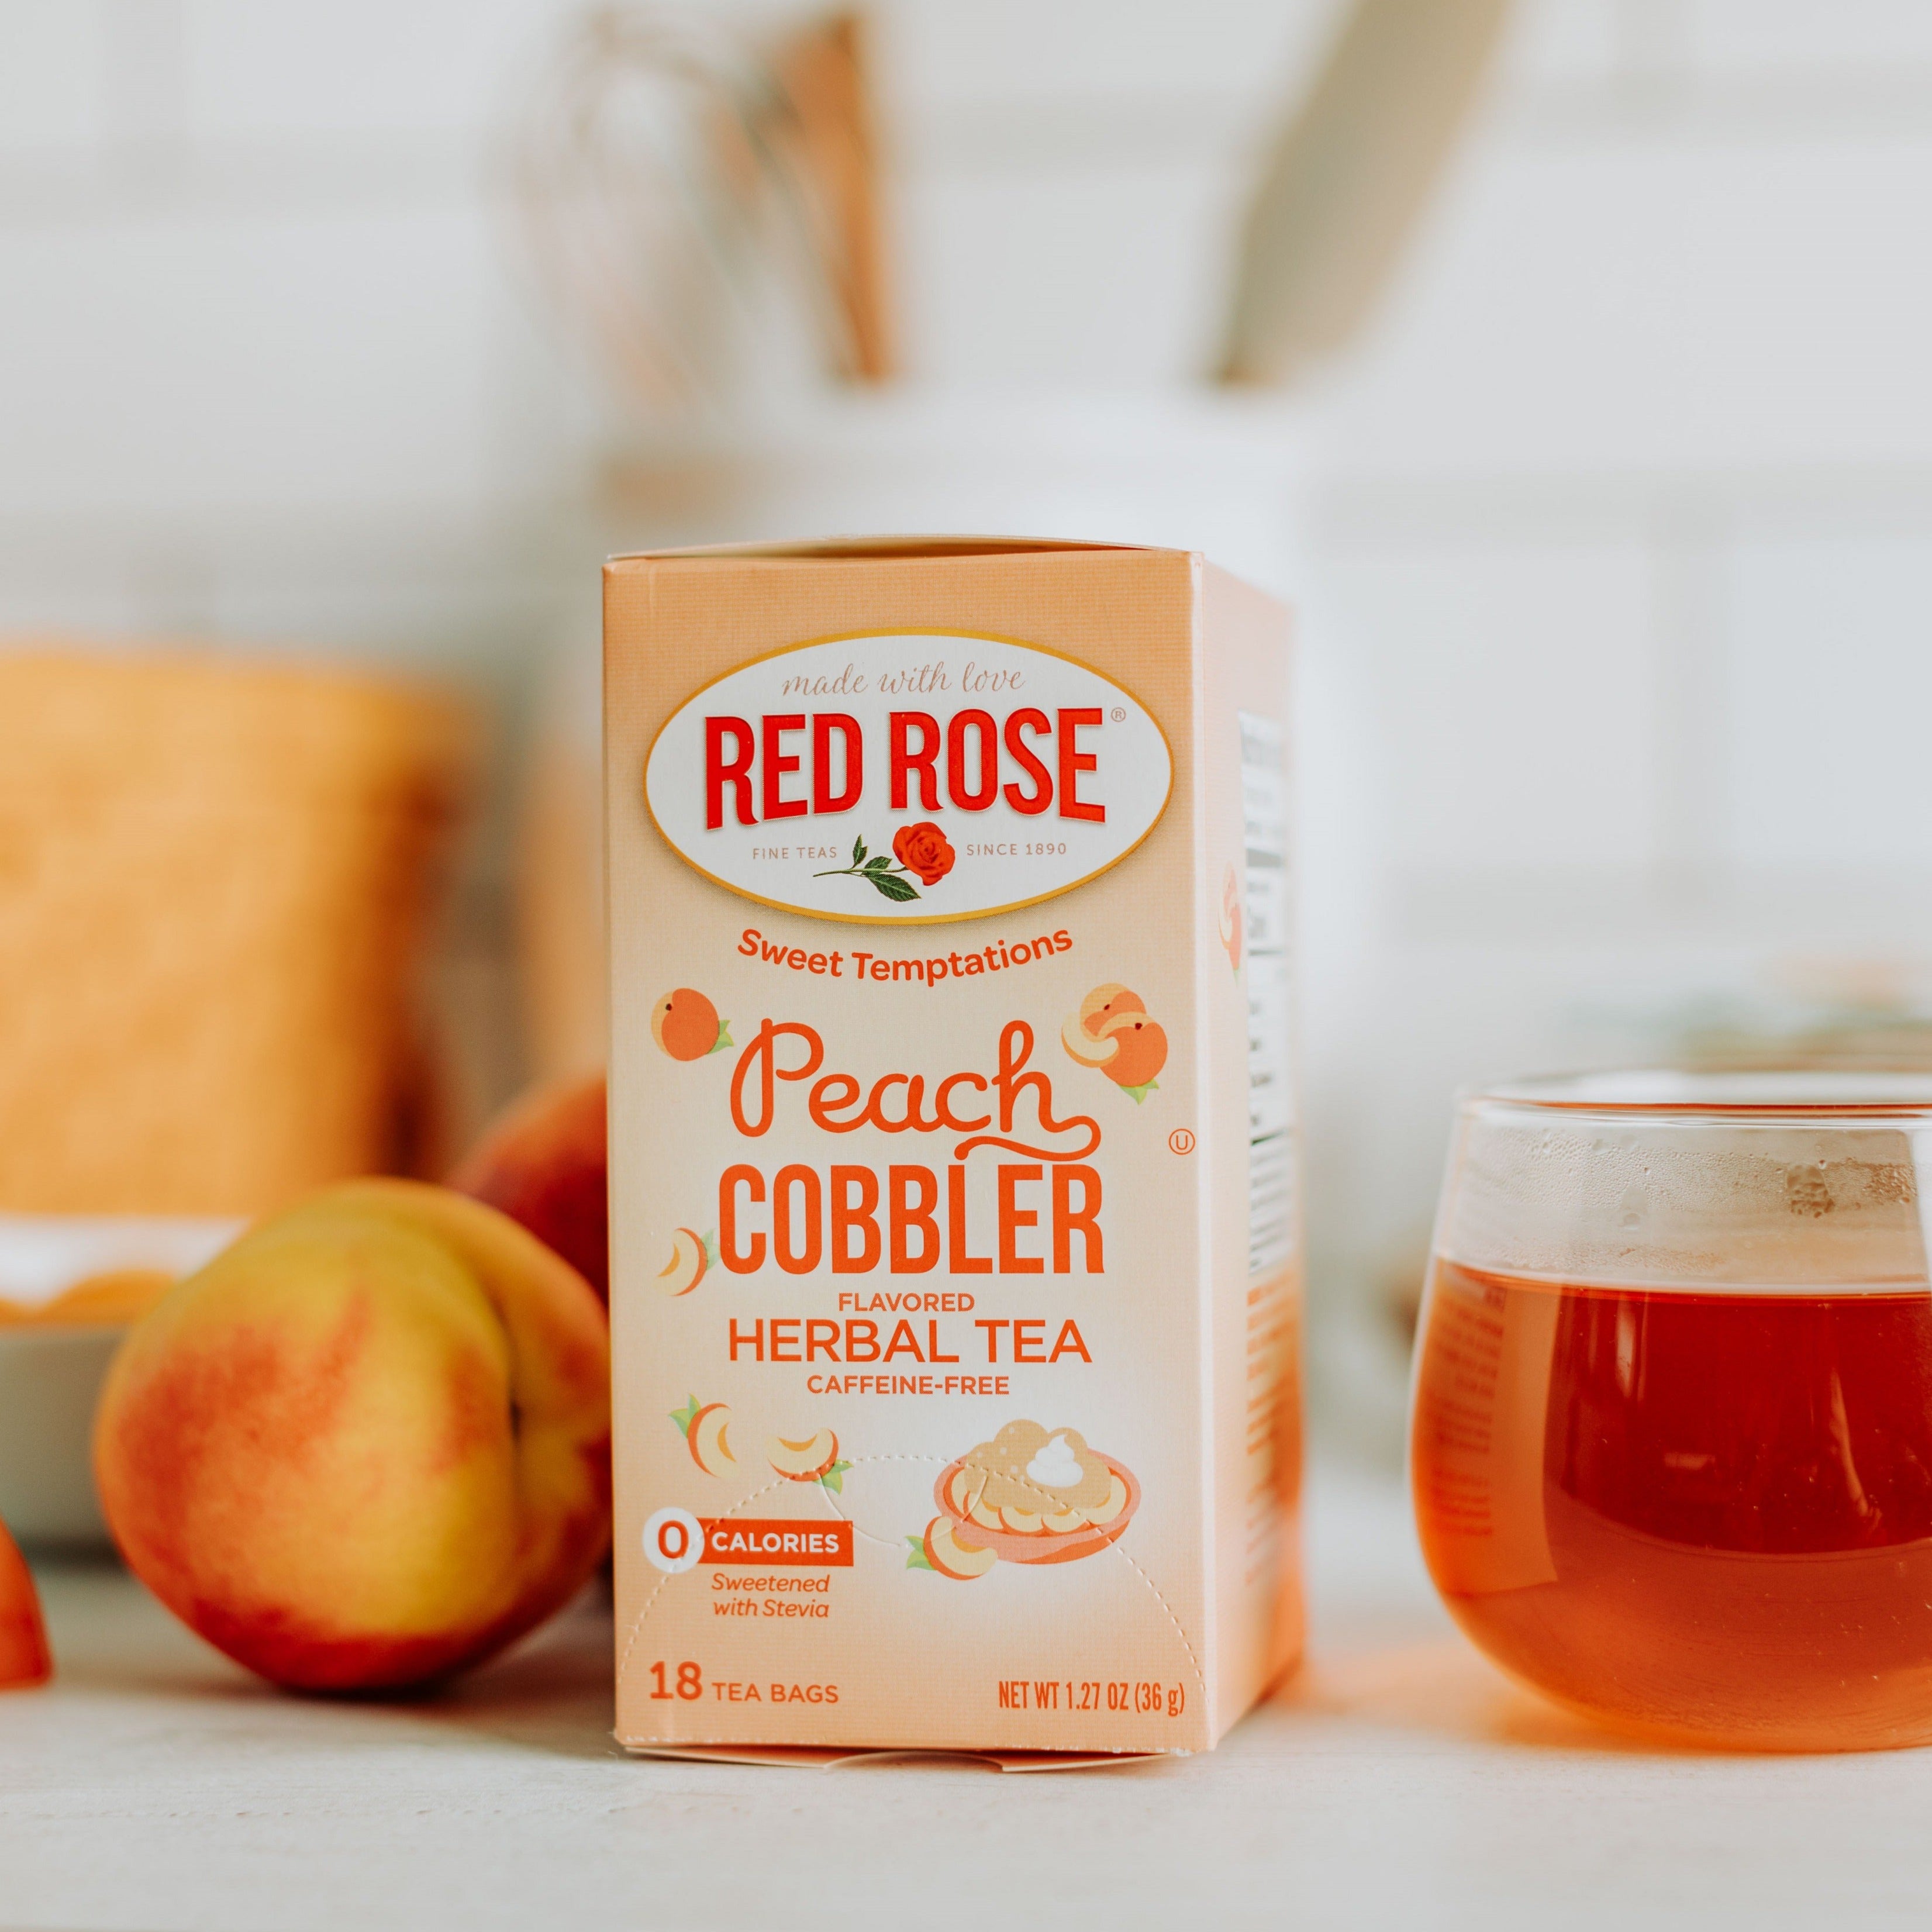 Red Rose Sweet Temptations Peach Cobbler Tea. Zero calorie tea.